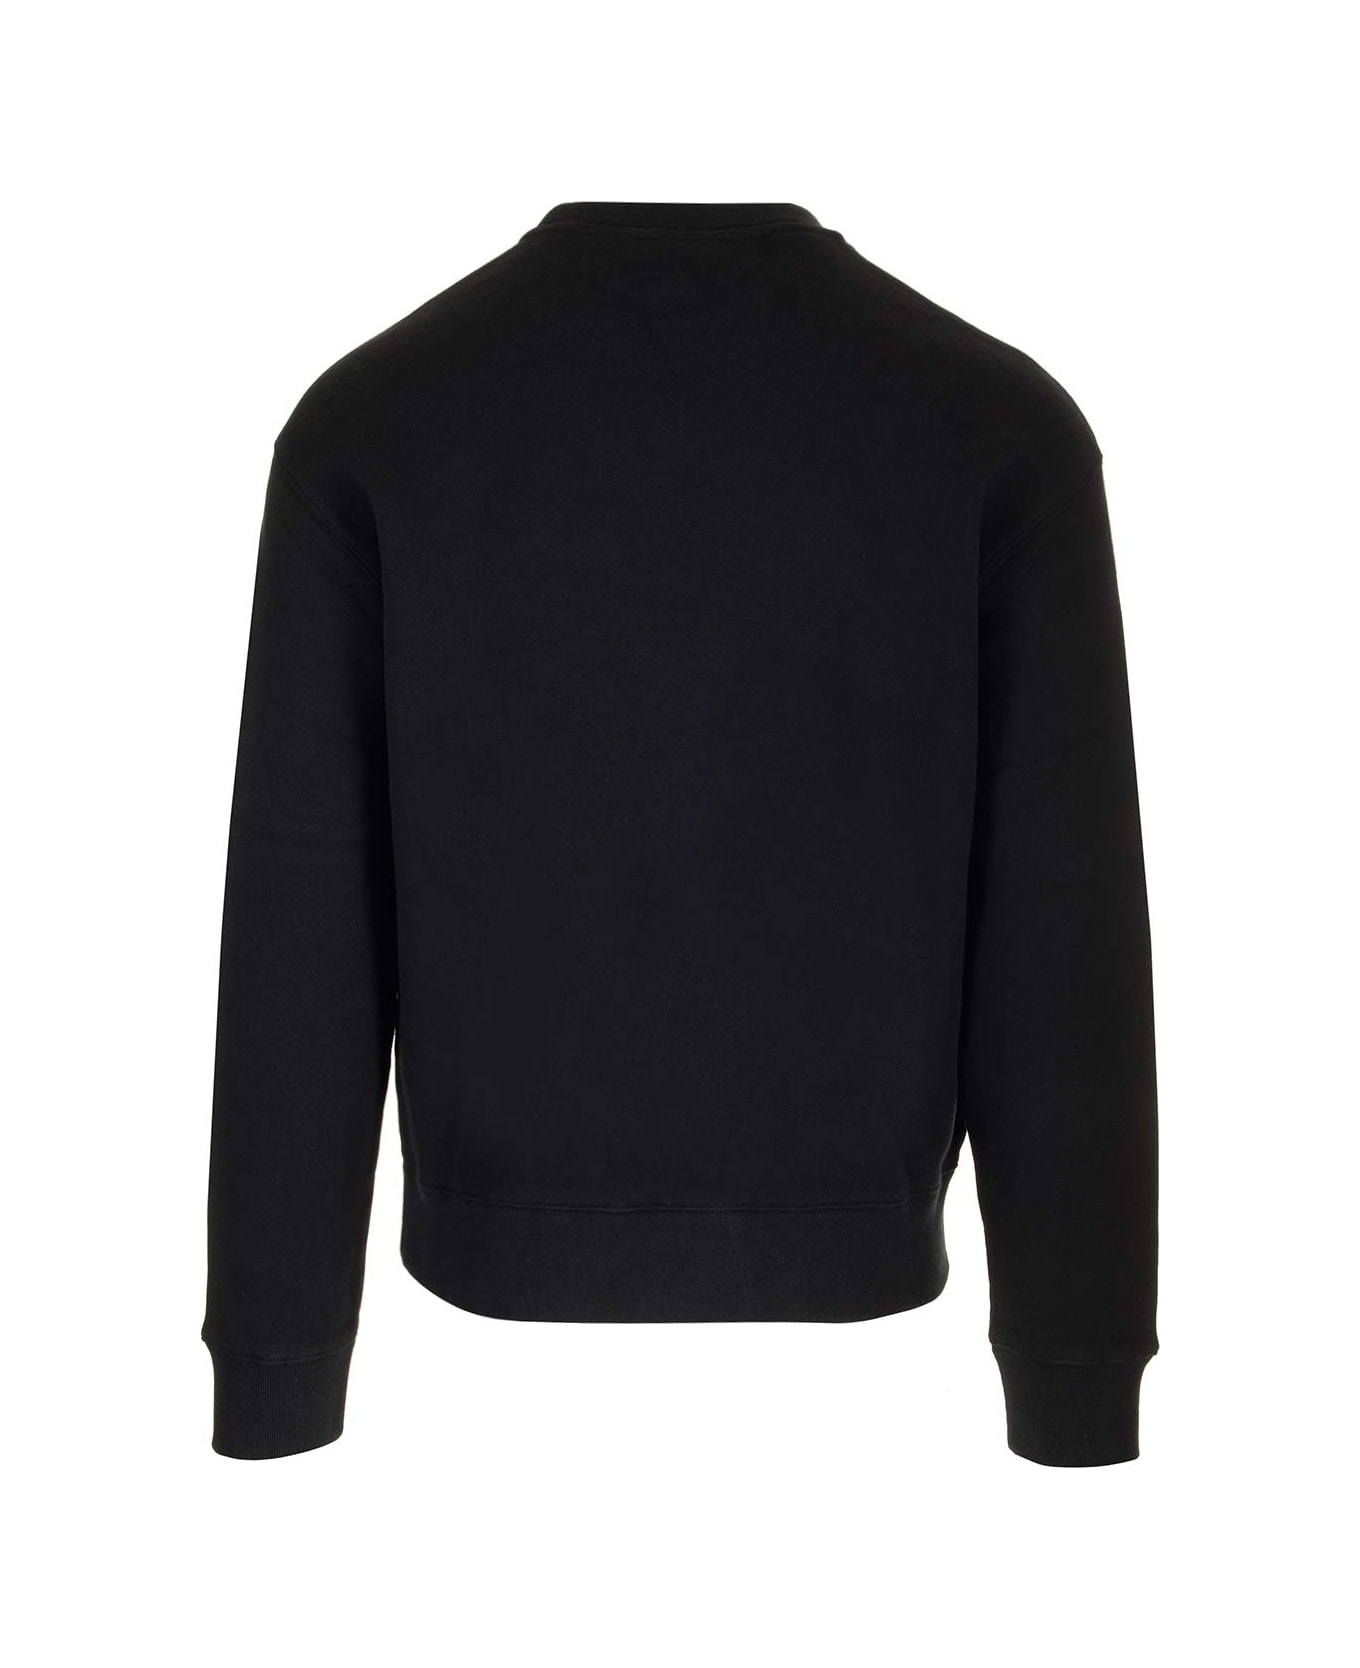 Maison Kitsuné Crewneck Sweatshirt - Black White フリース